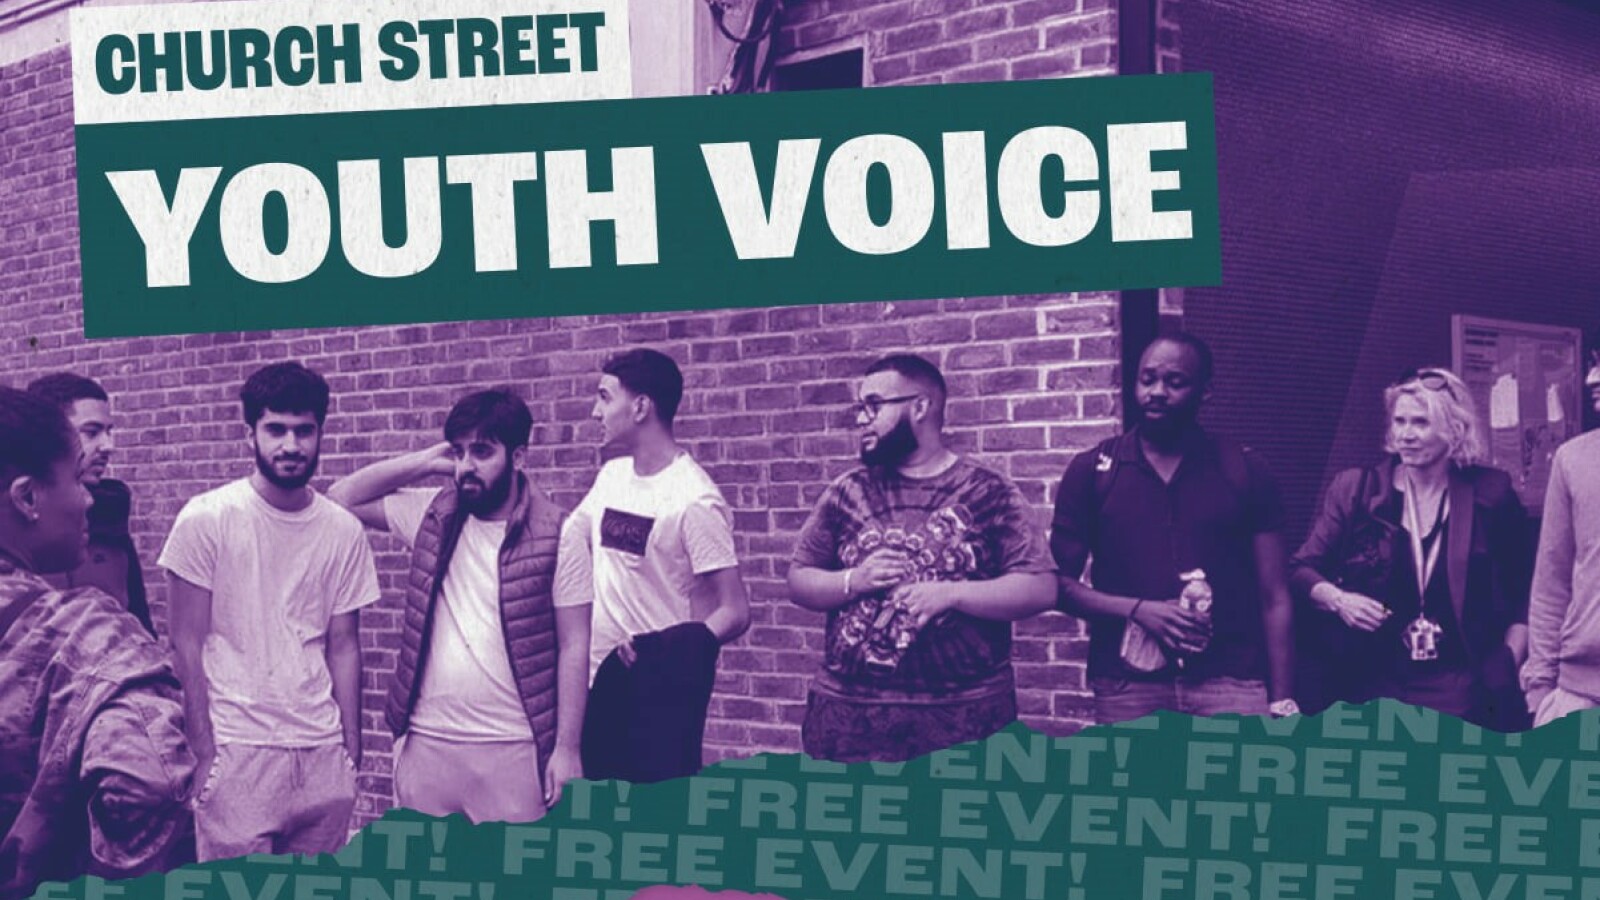 Church Street Youth Voice 2 v3